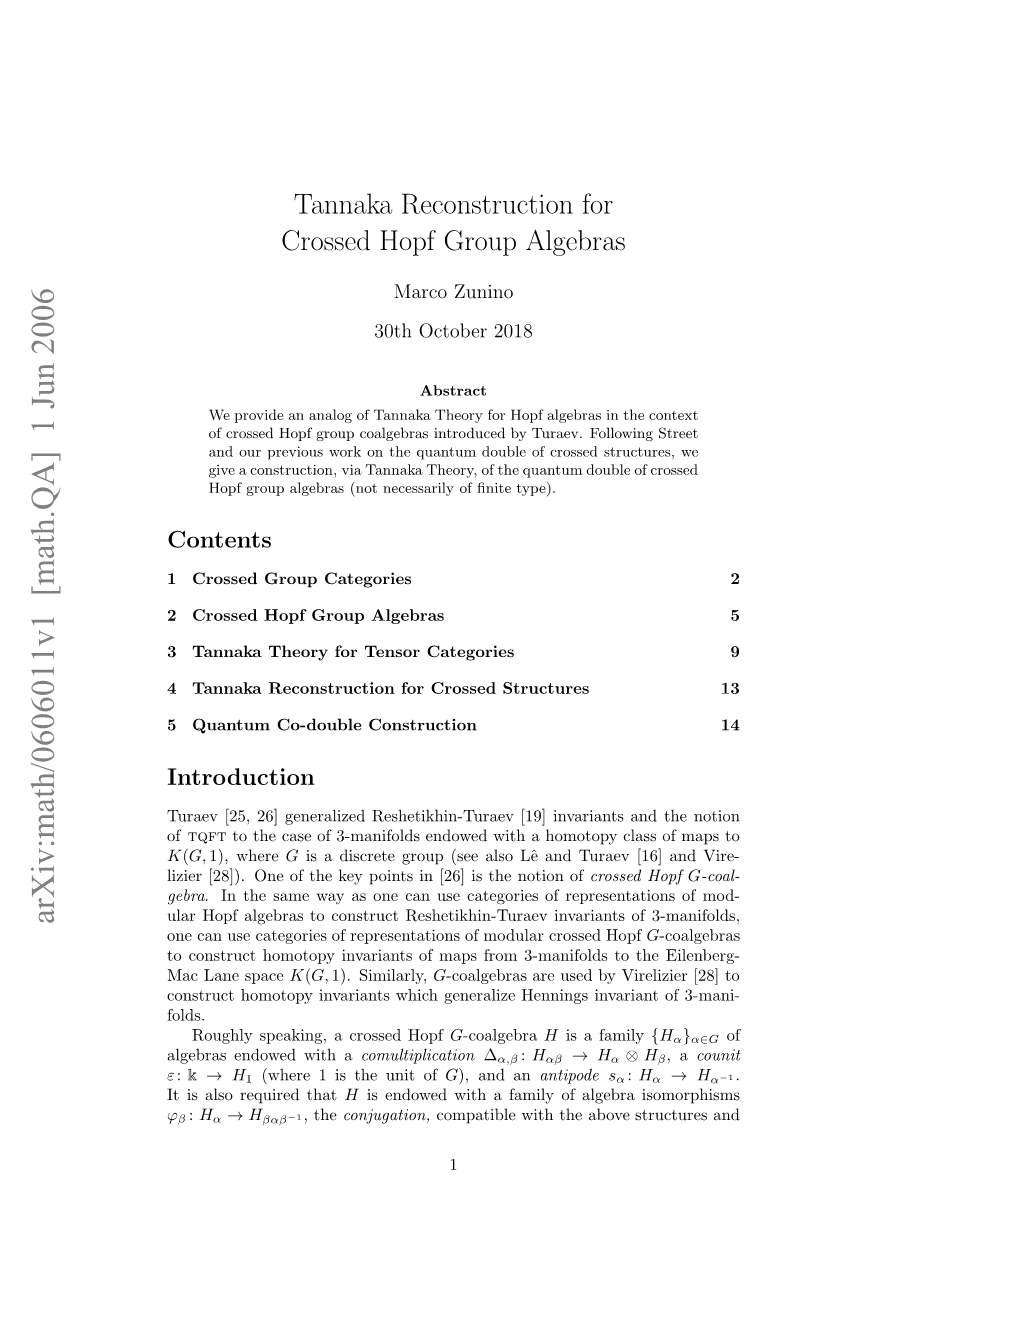 Tannaka Reconstruction for Crossed Hopf Group Algebras